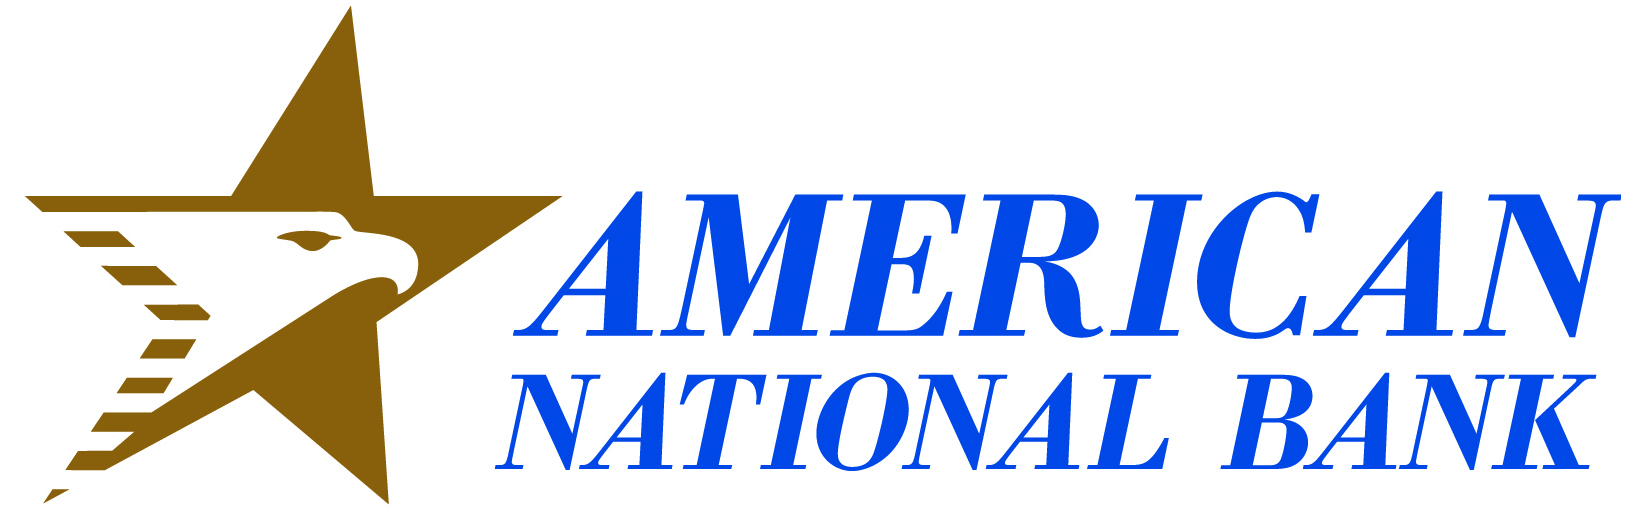 American Trust Bank Logo photo - 1